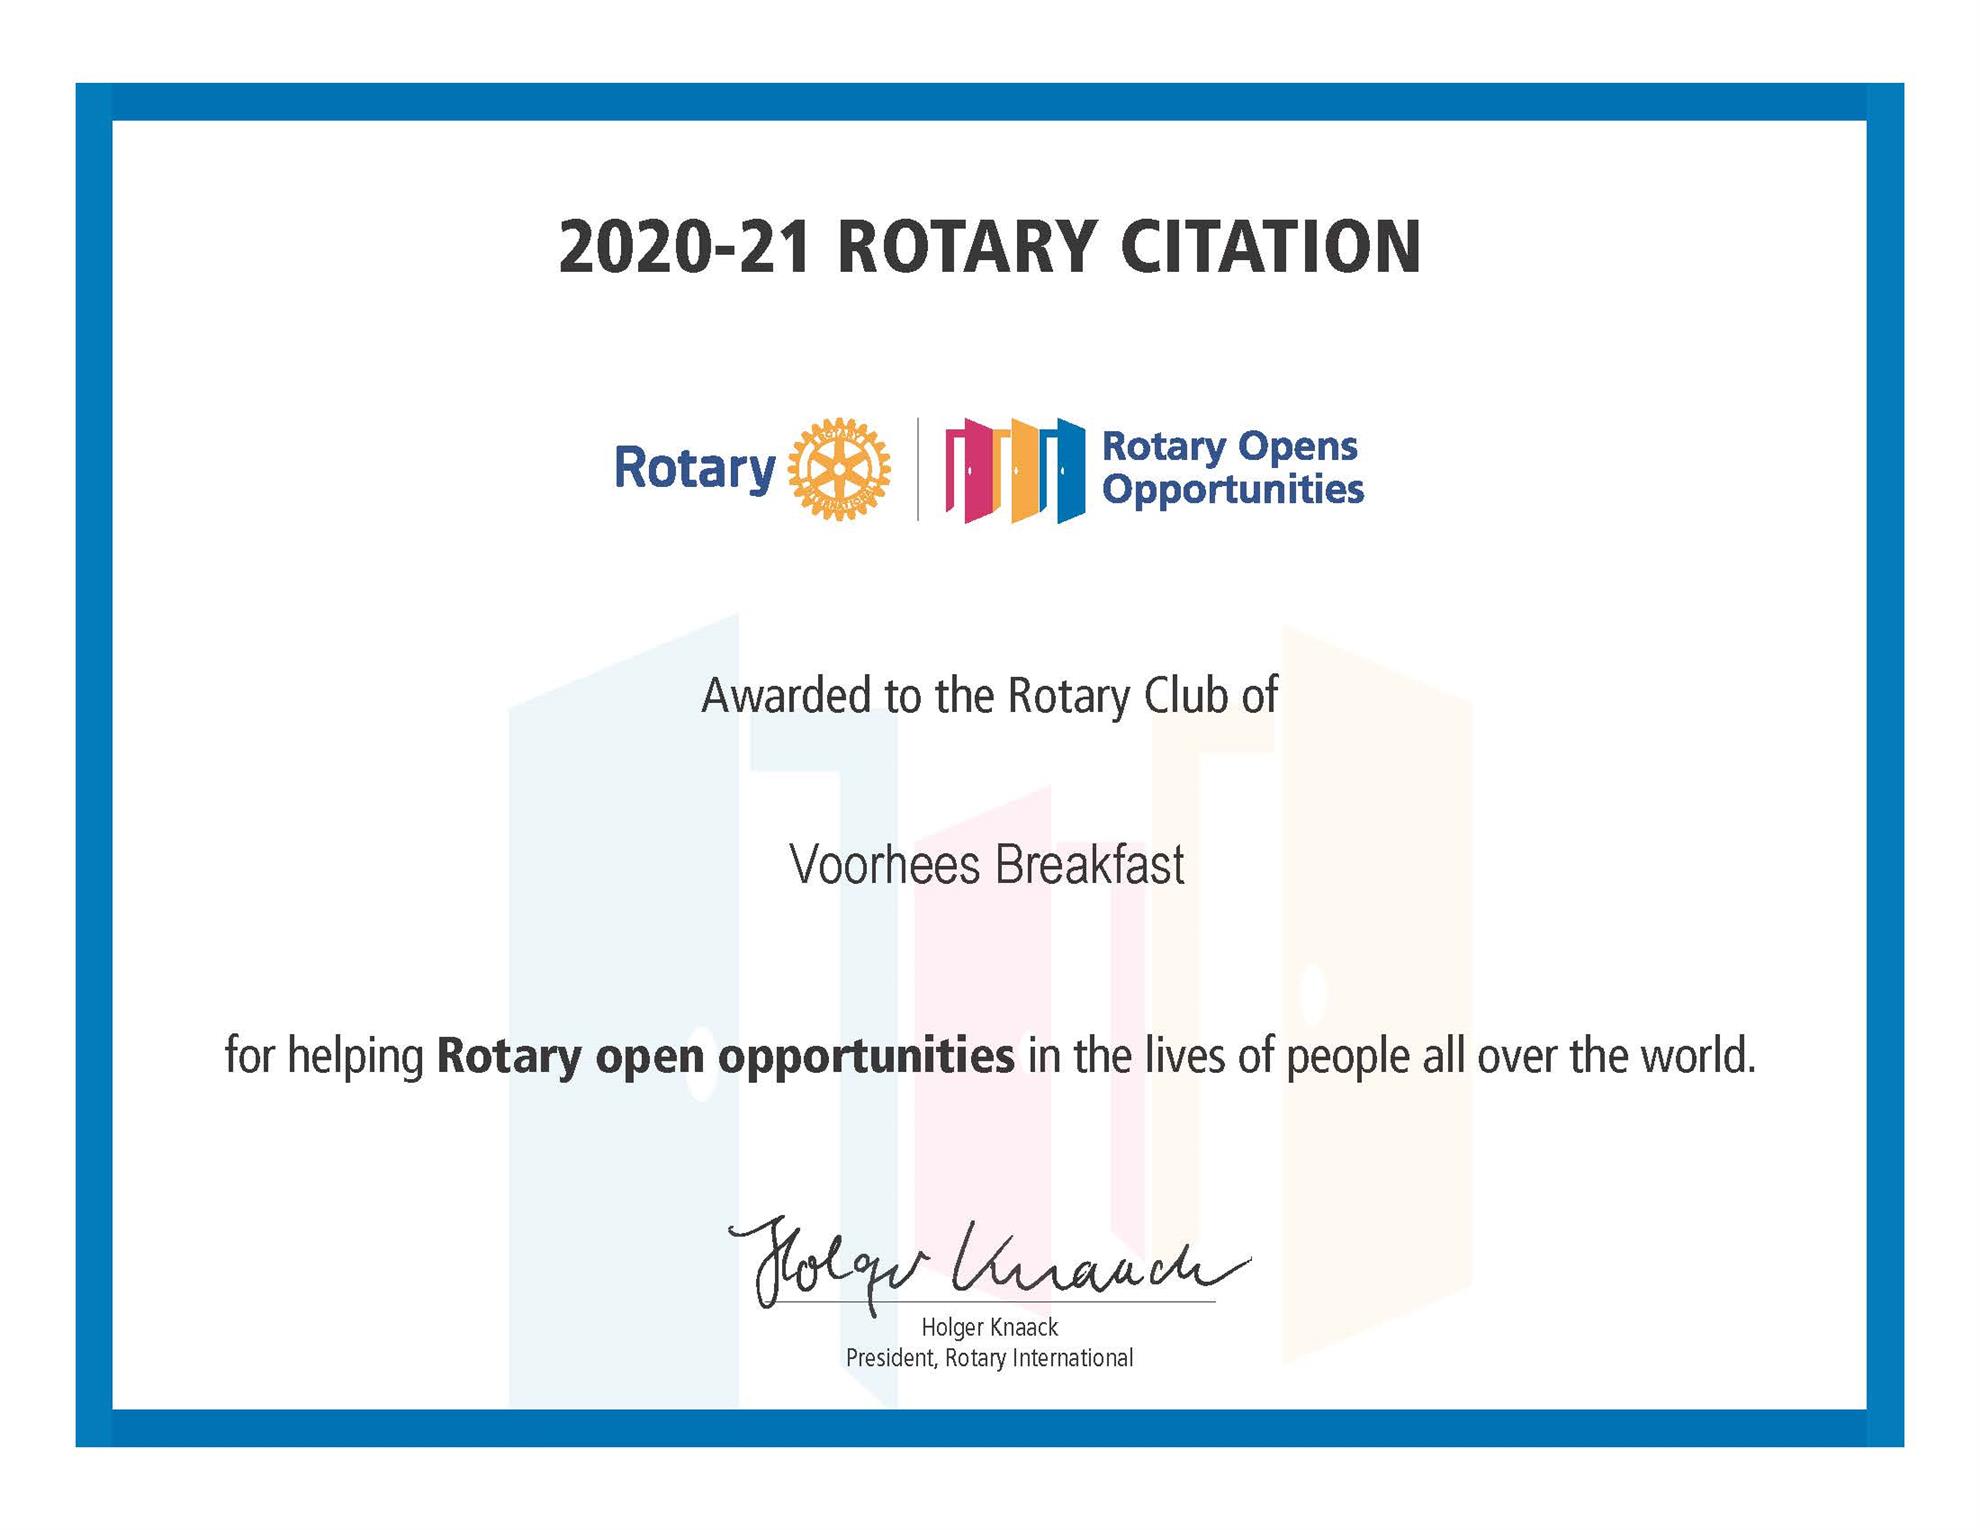 2020-21 Rotary International citation